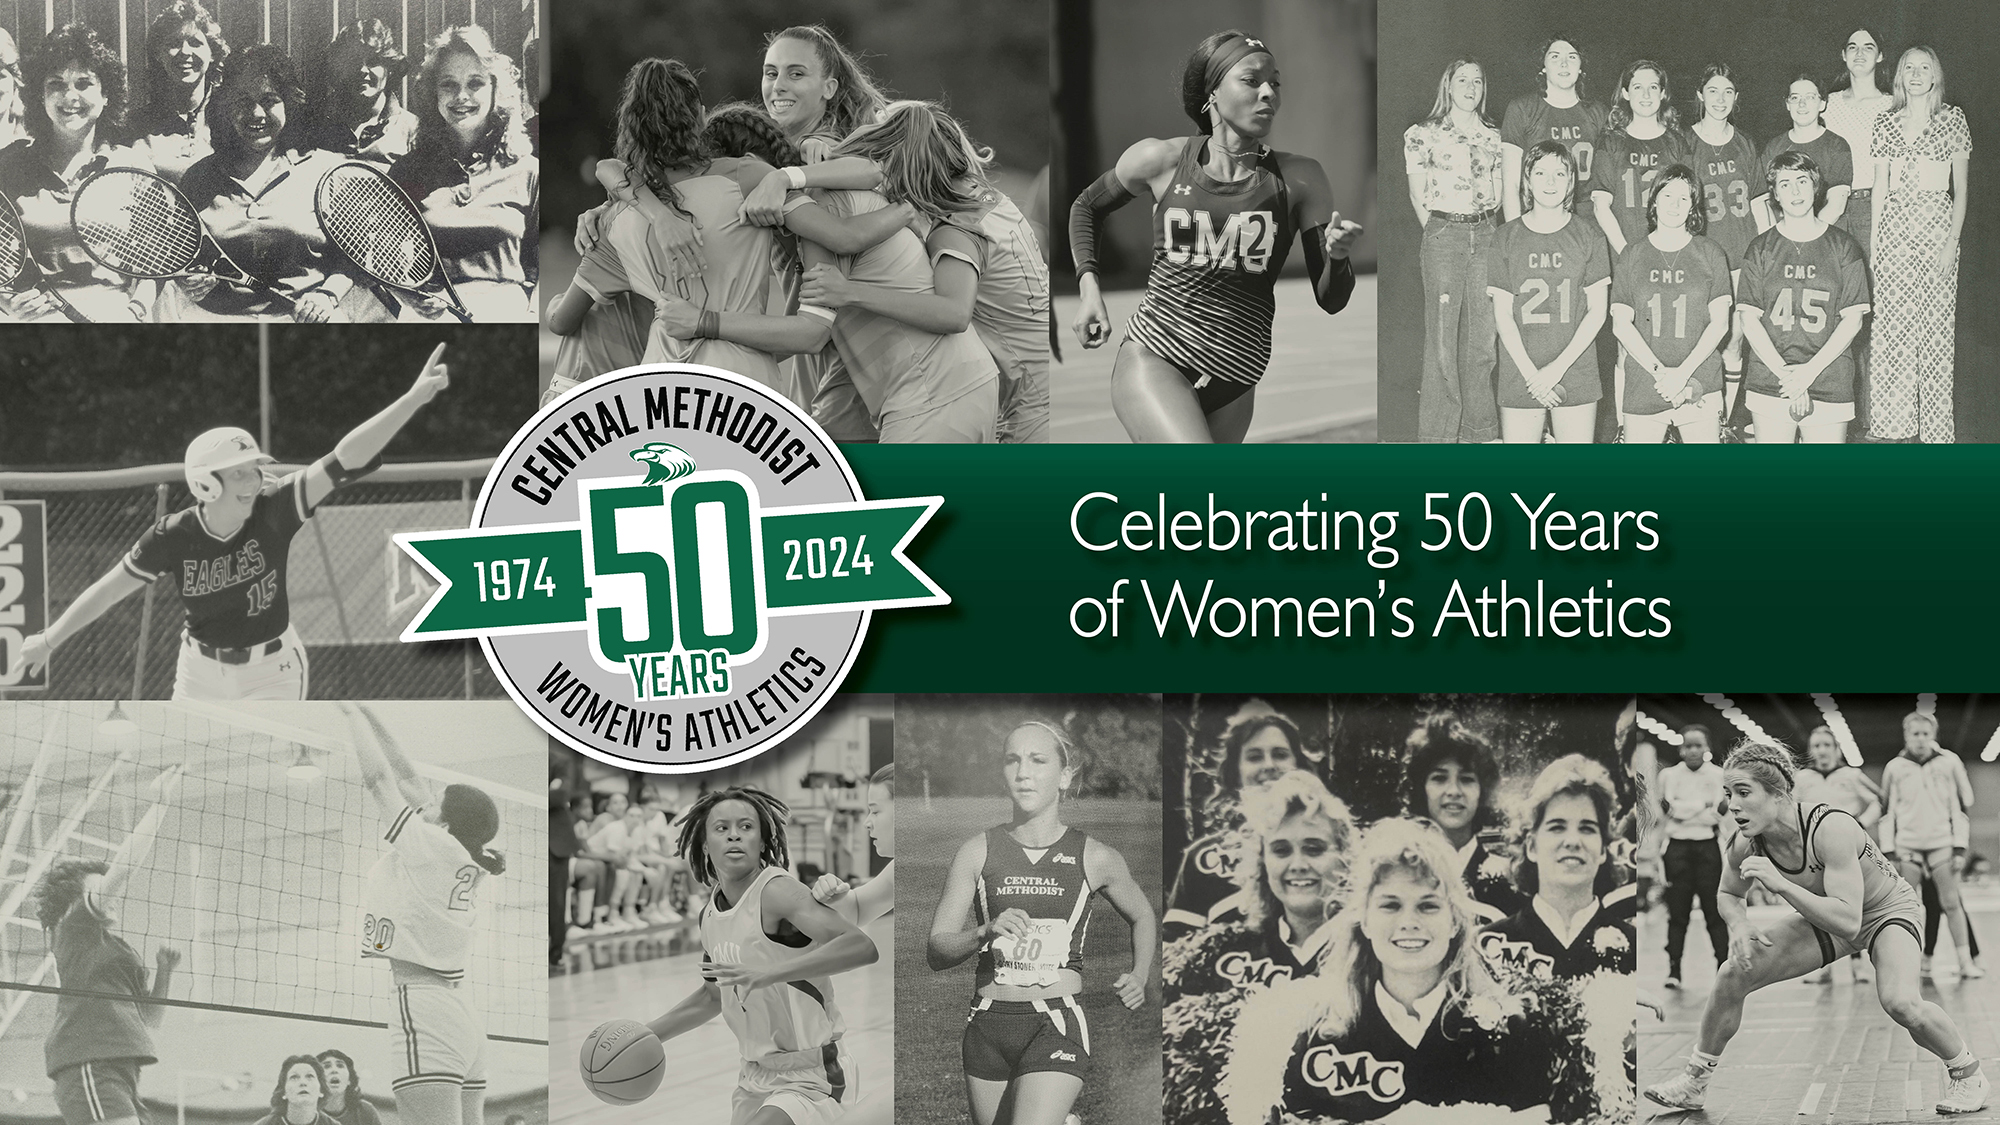 CMU 50 Years of Women's Athletics logo